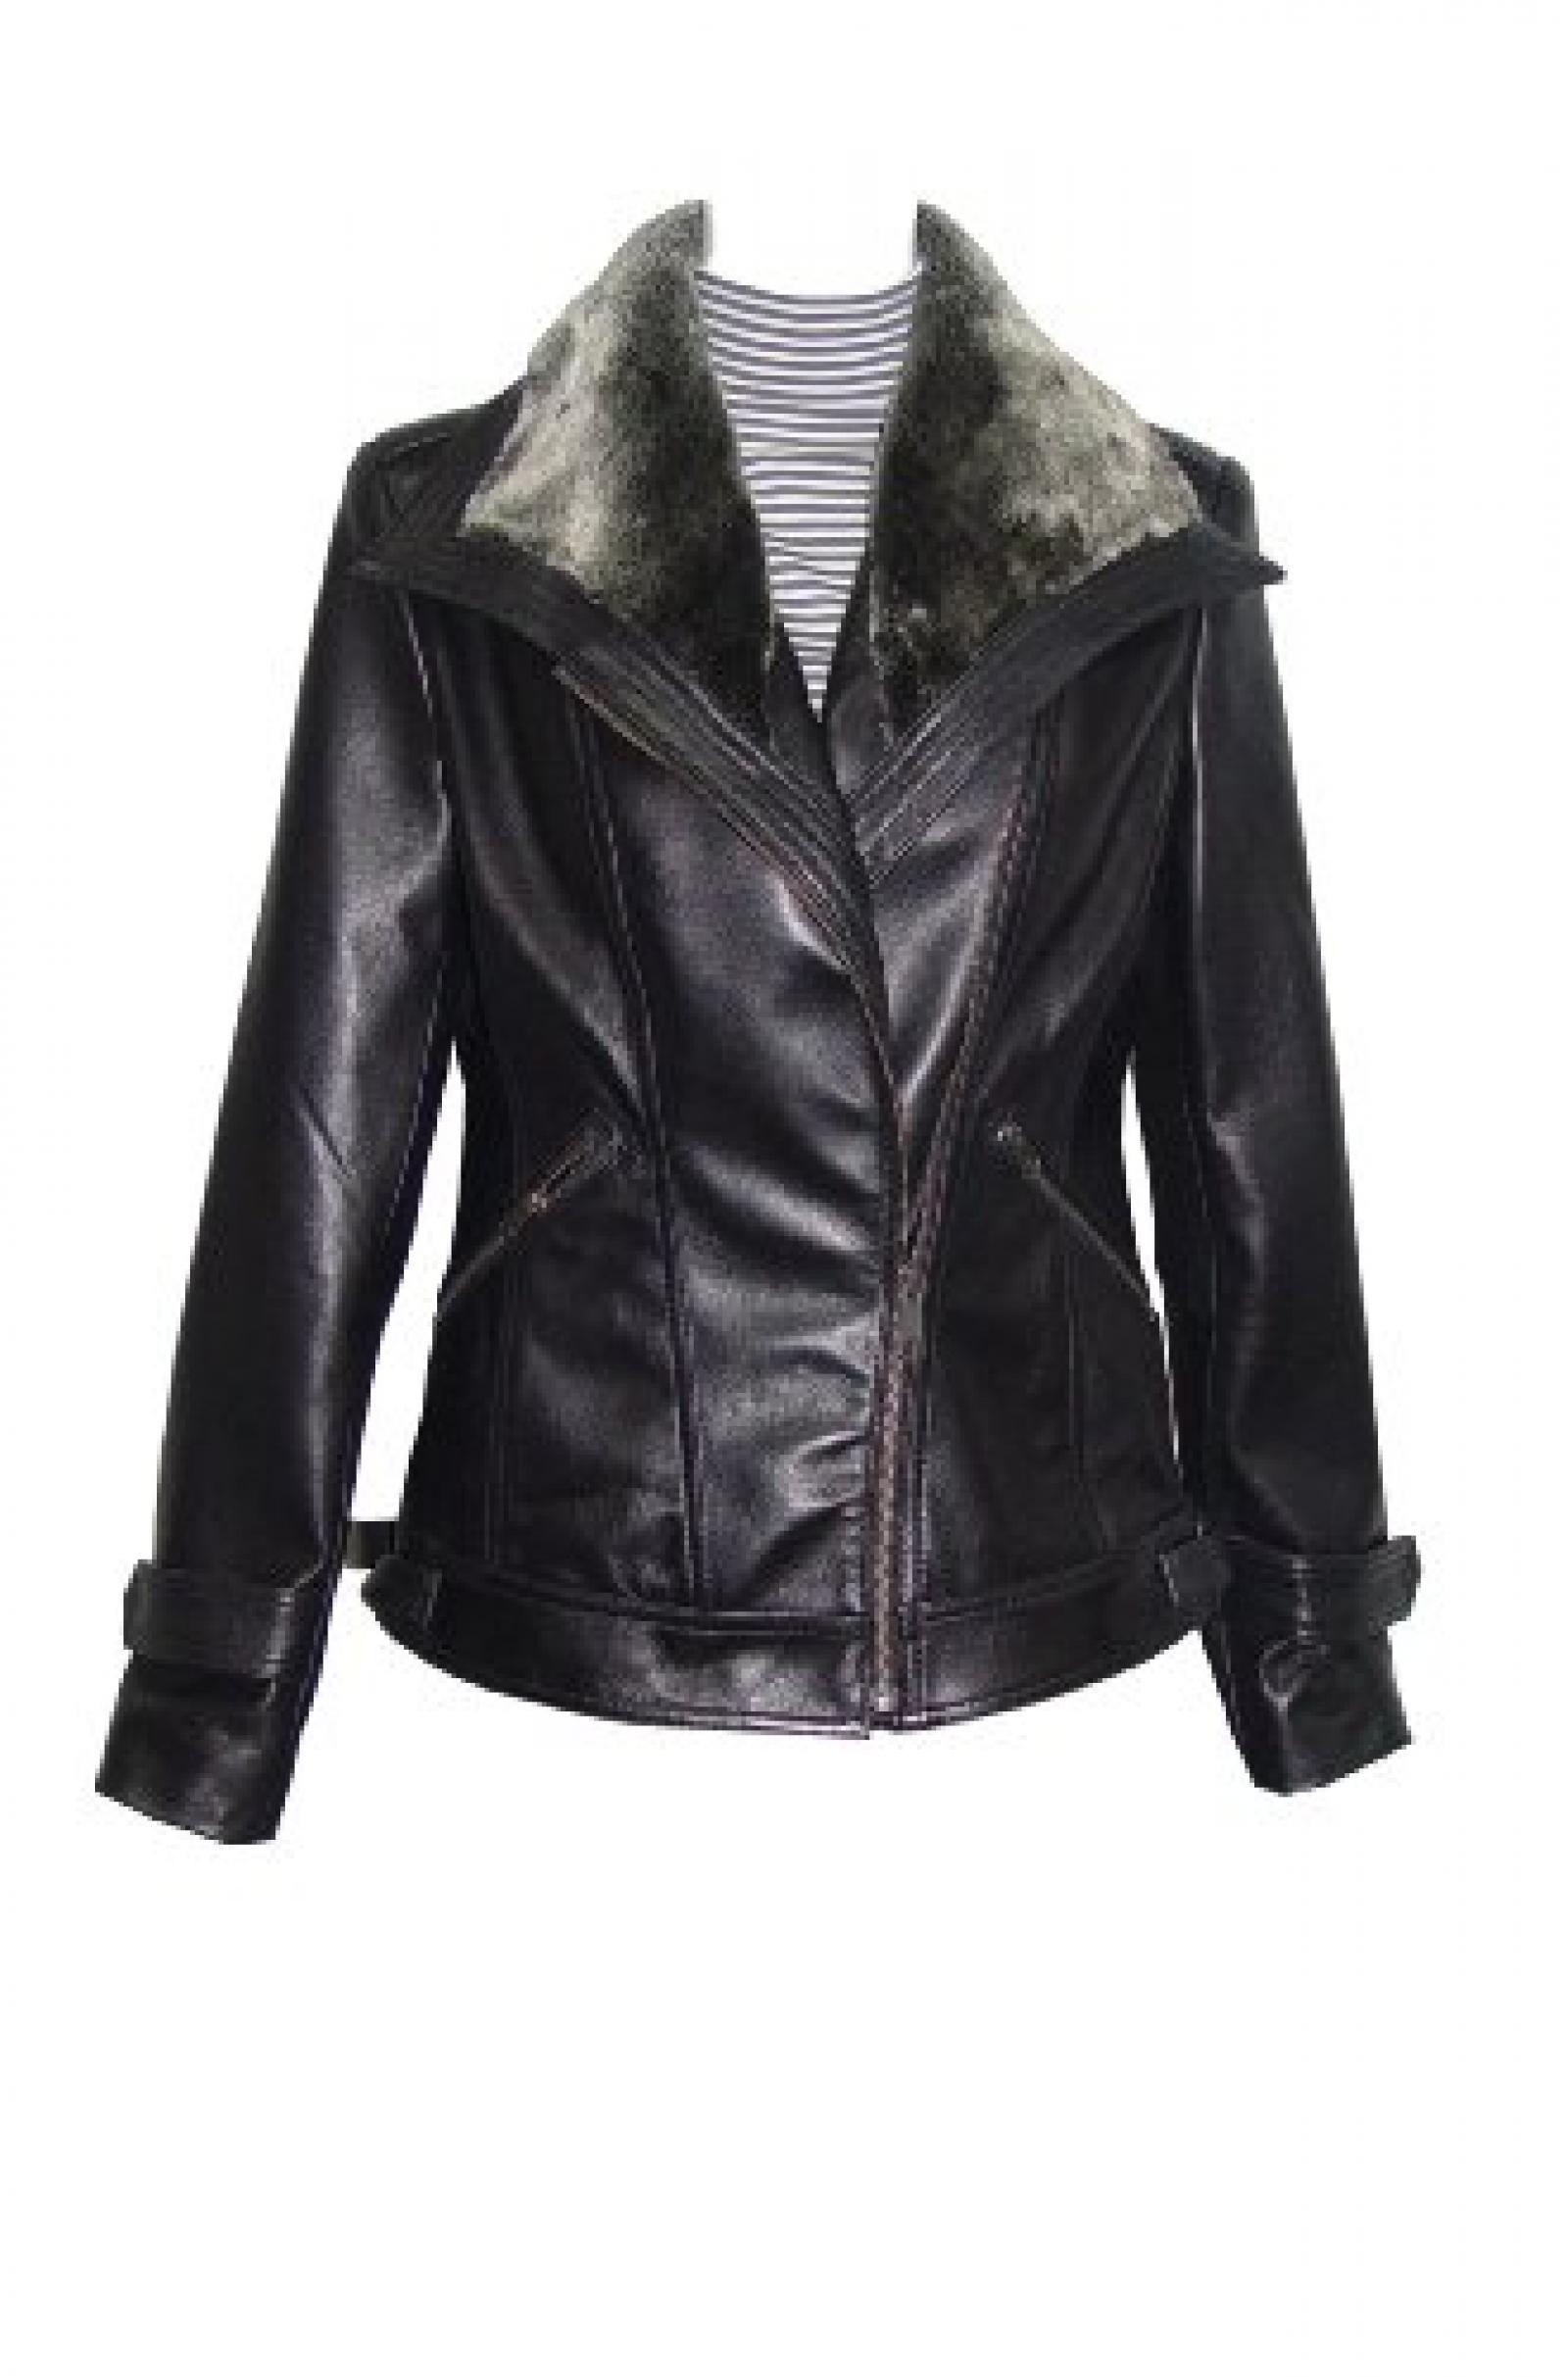 Nettailor Women PETITE SZ 4061 Lamb Leather Motorcycle Jacket Fake Fur Collar 